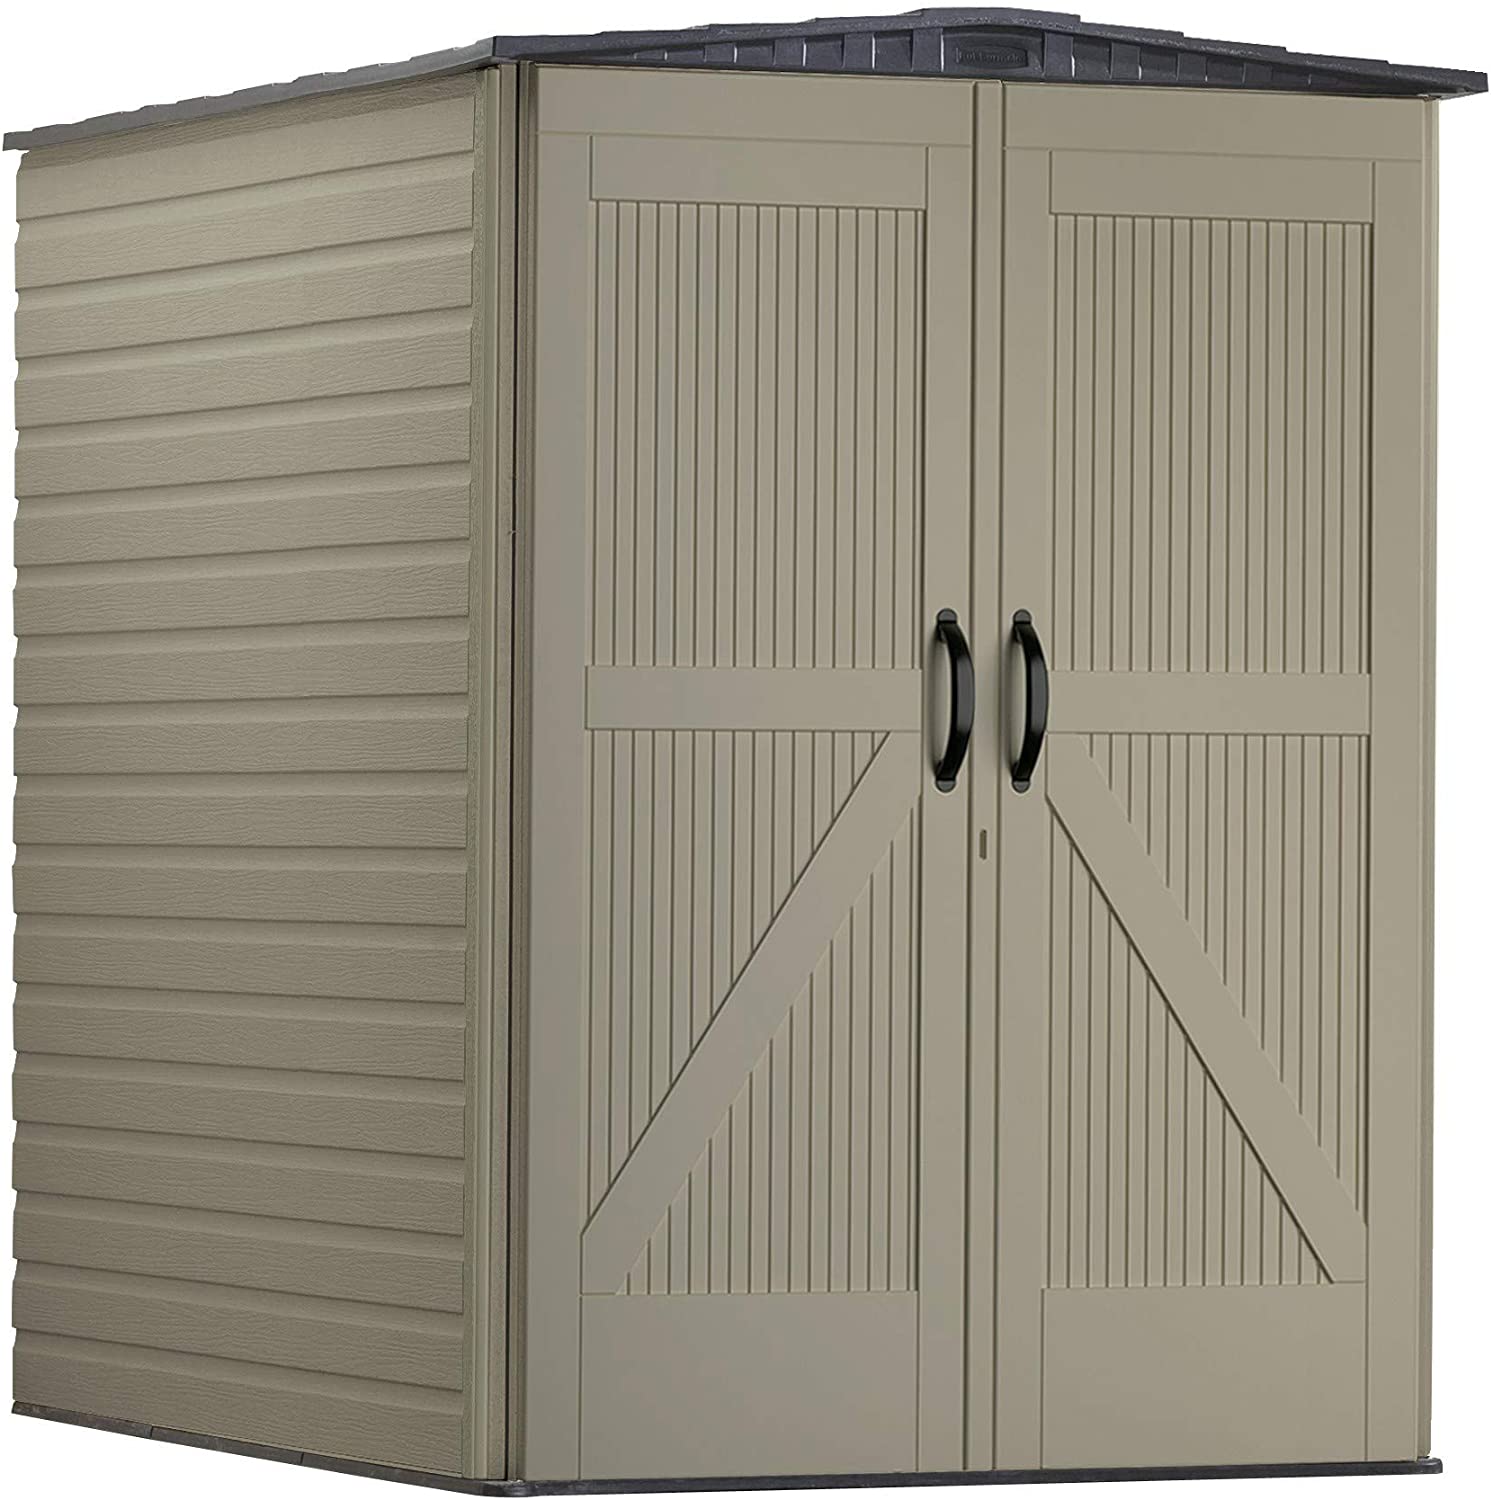 https://www.dontwasteyourmoney.com/wp-content/uploads/2021/08/rubbermaid-plastic-resin-outdoor-storage-container-outdoor-storage.jpg